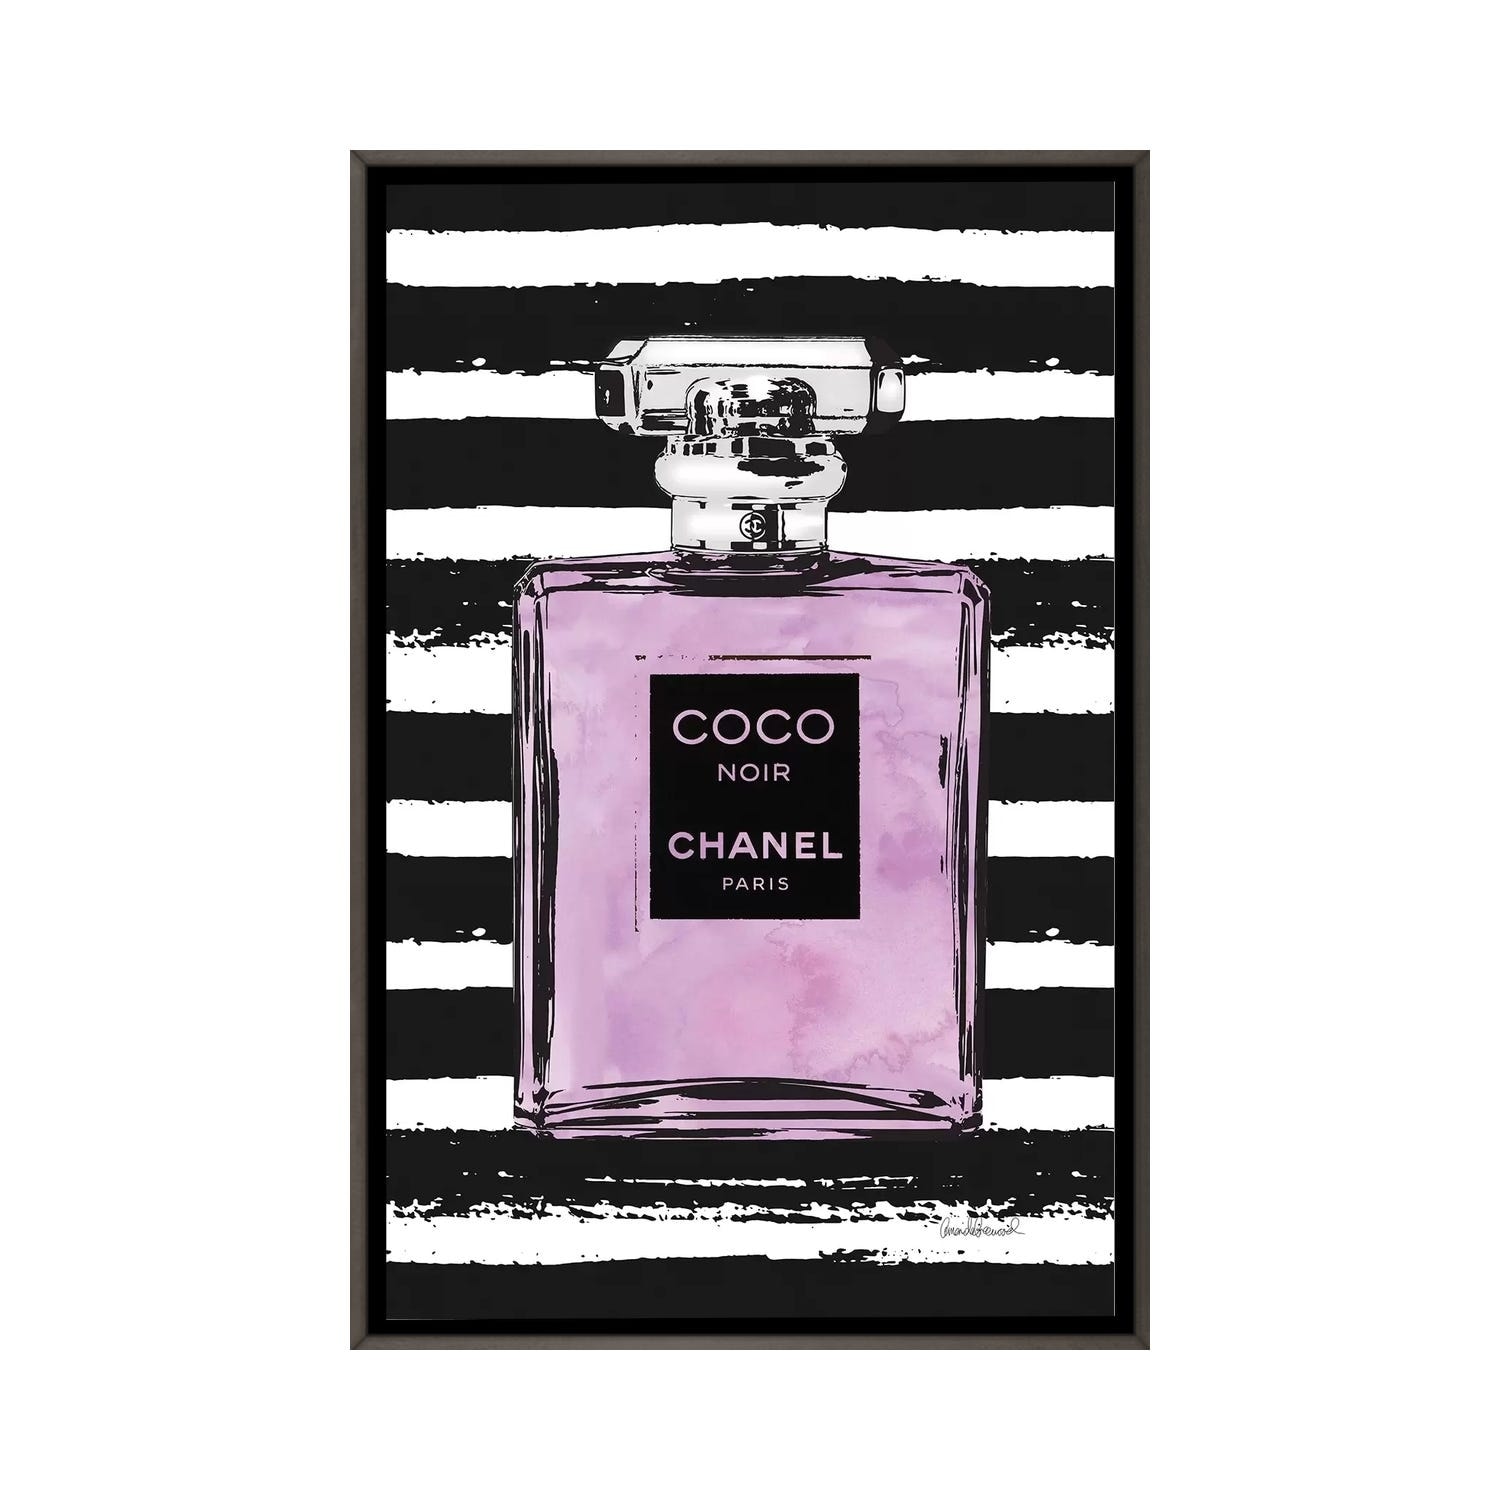 Amanda Greenwood Canvas Wall Decor Prints - Perfume Bottle, Gold & Grey ( Fashion > Fashion Brands > Chanel art) - 40x26 in